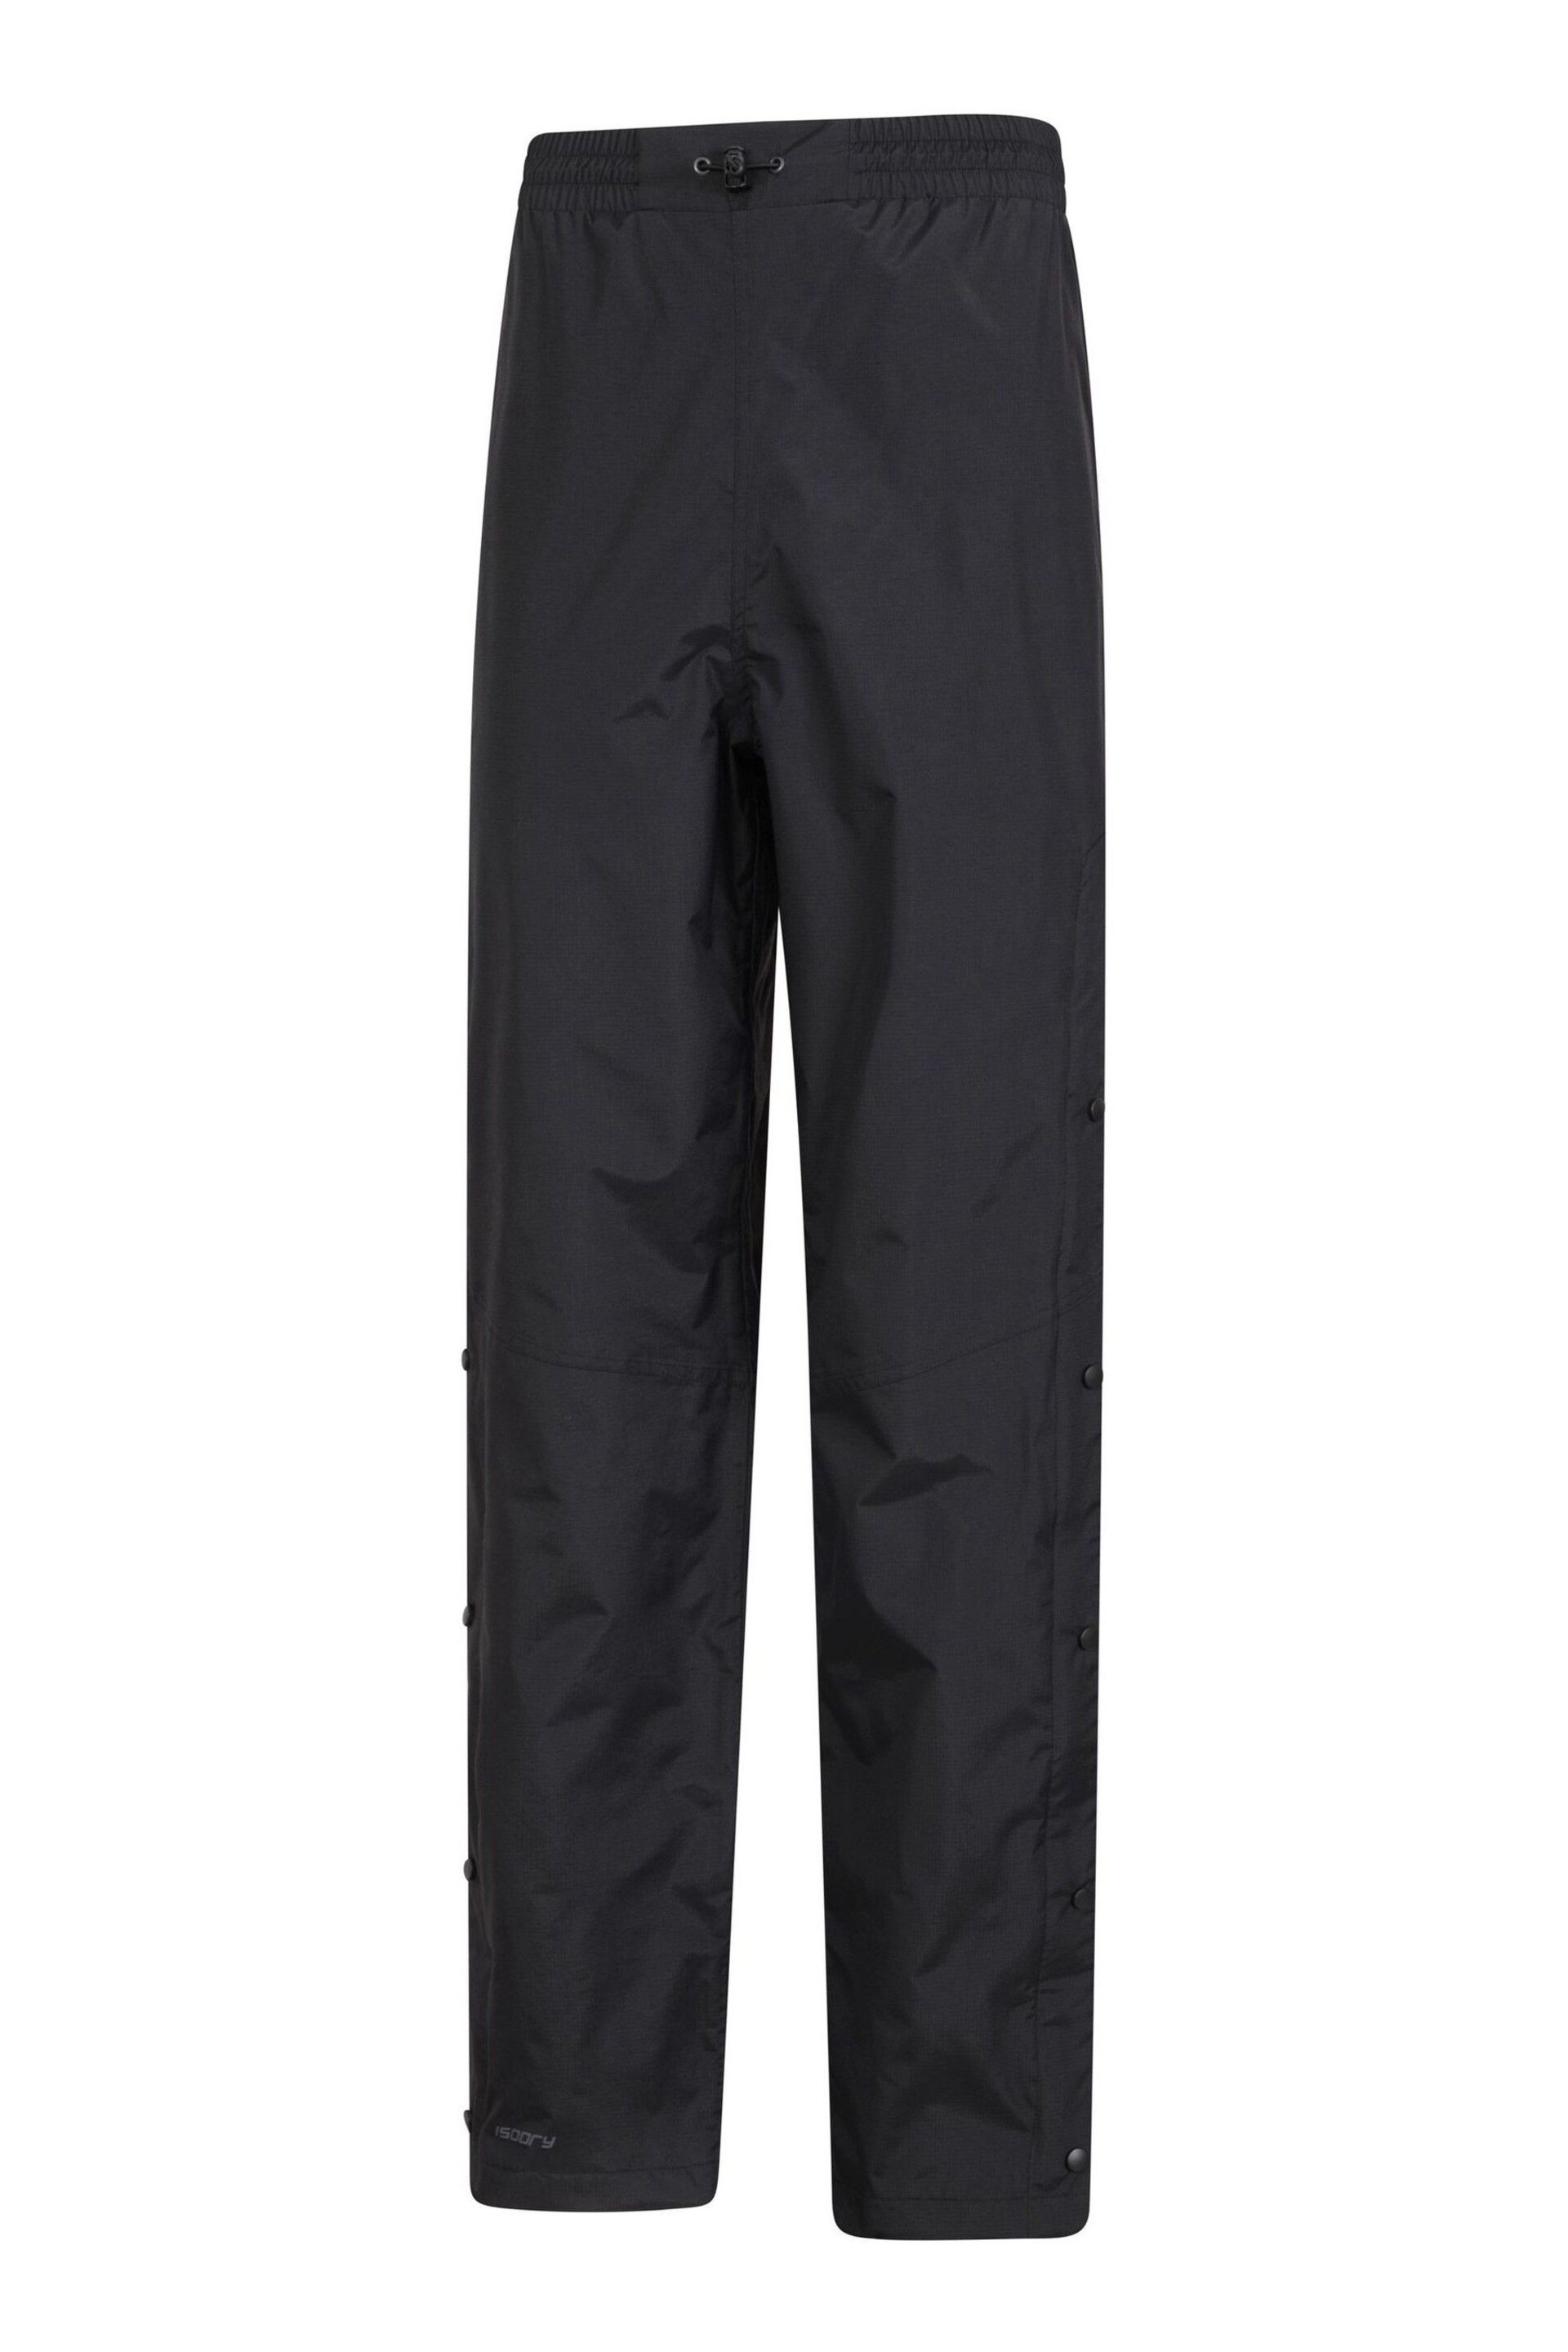 Mountain Warehouse Black Downpour Mens Waterproof Trousers - Short Length - Image 4 of 6